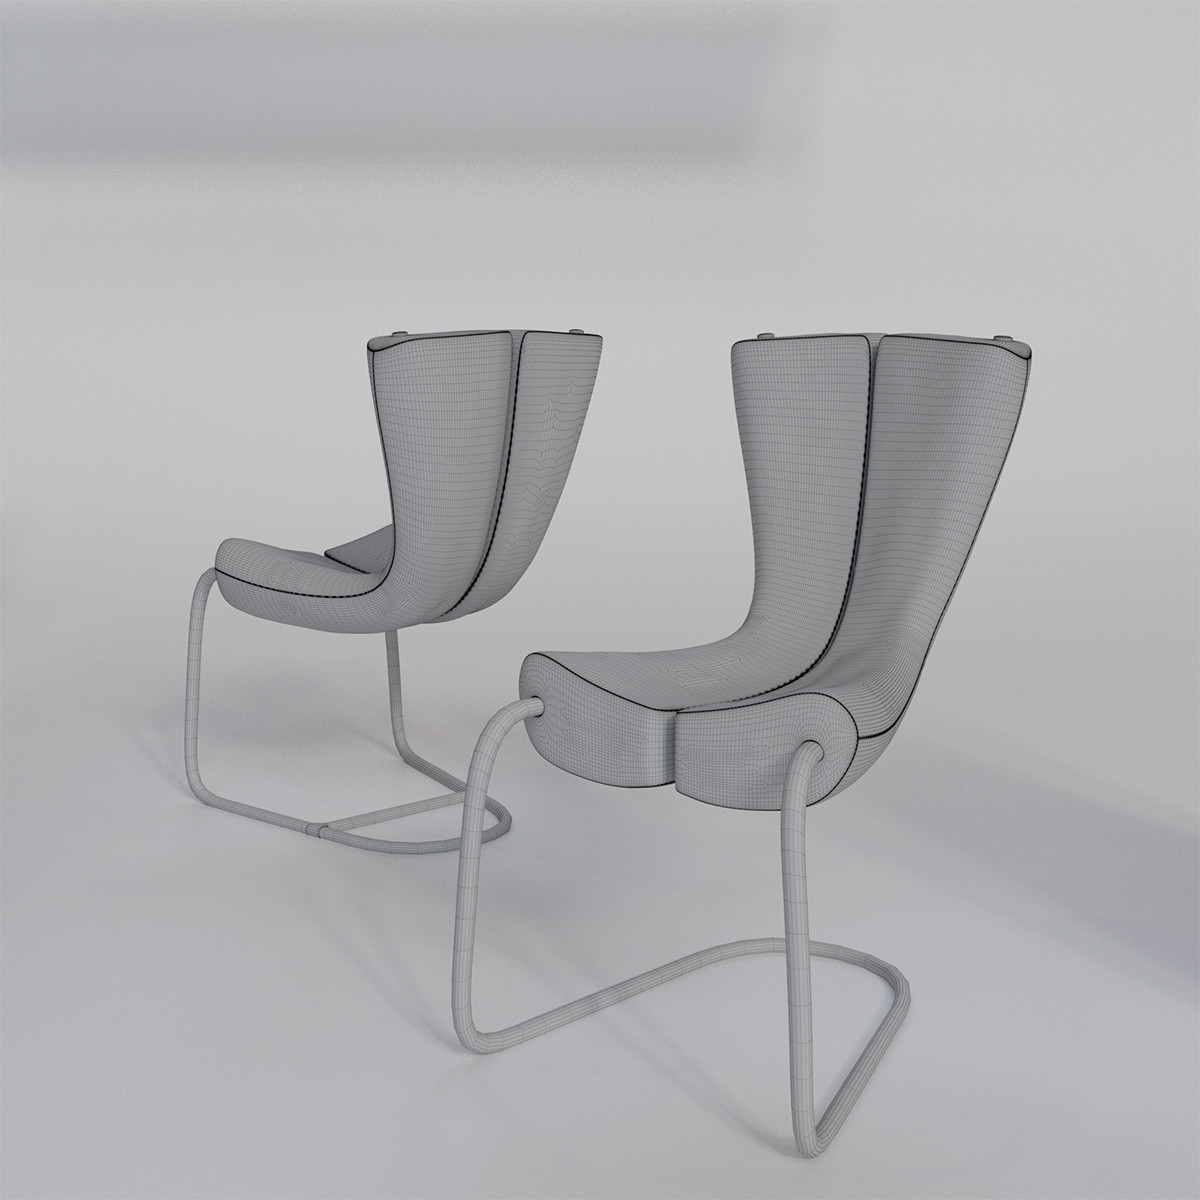 Roman Shipulin - Komed Chair By Marc Newson 3D model